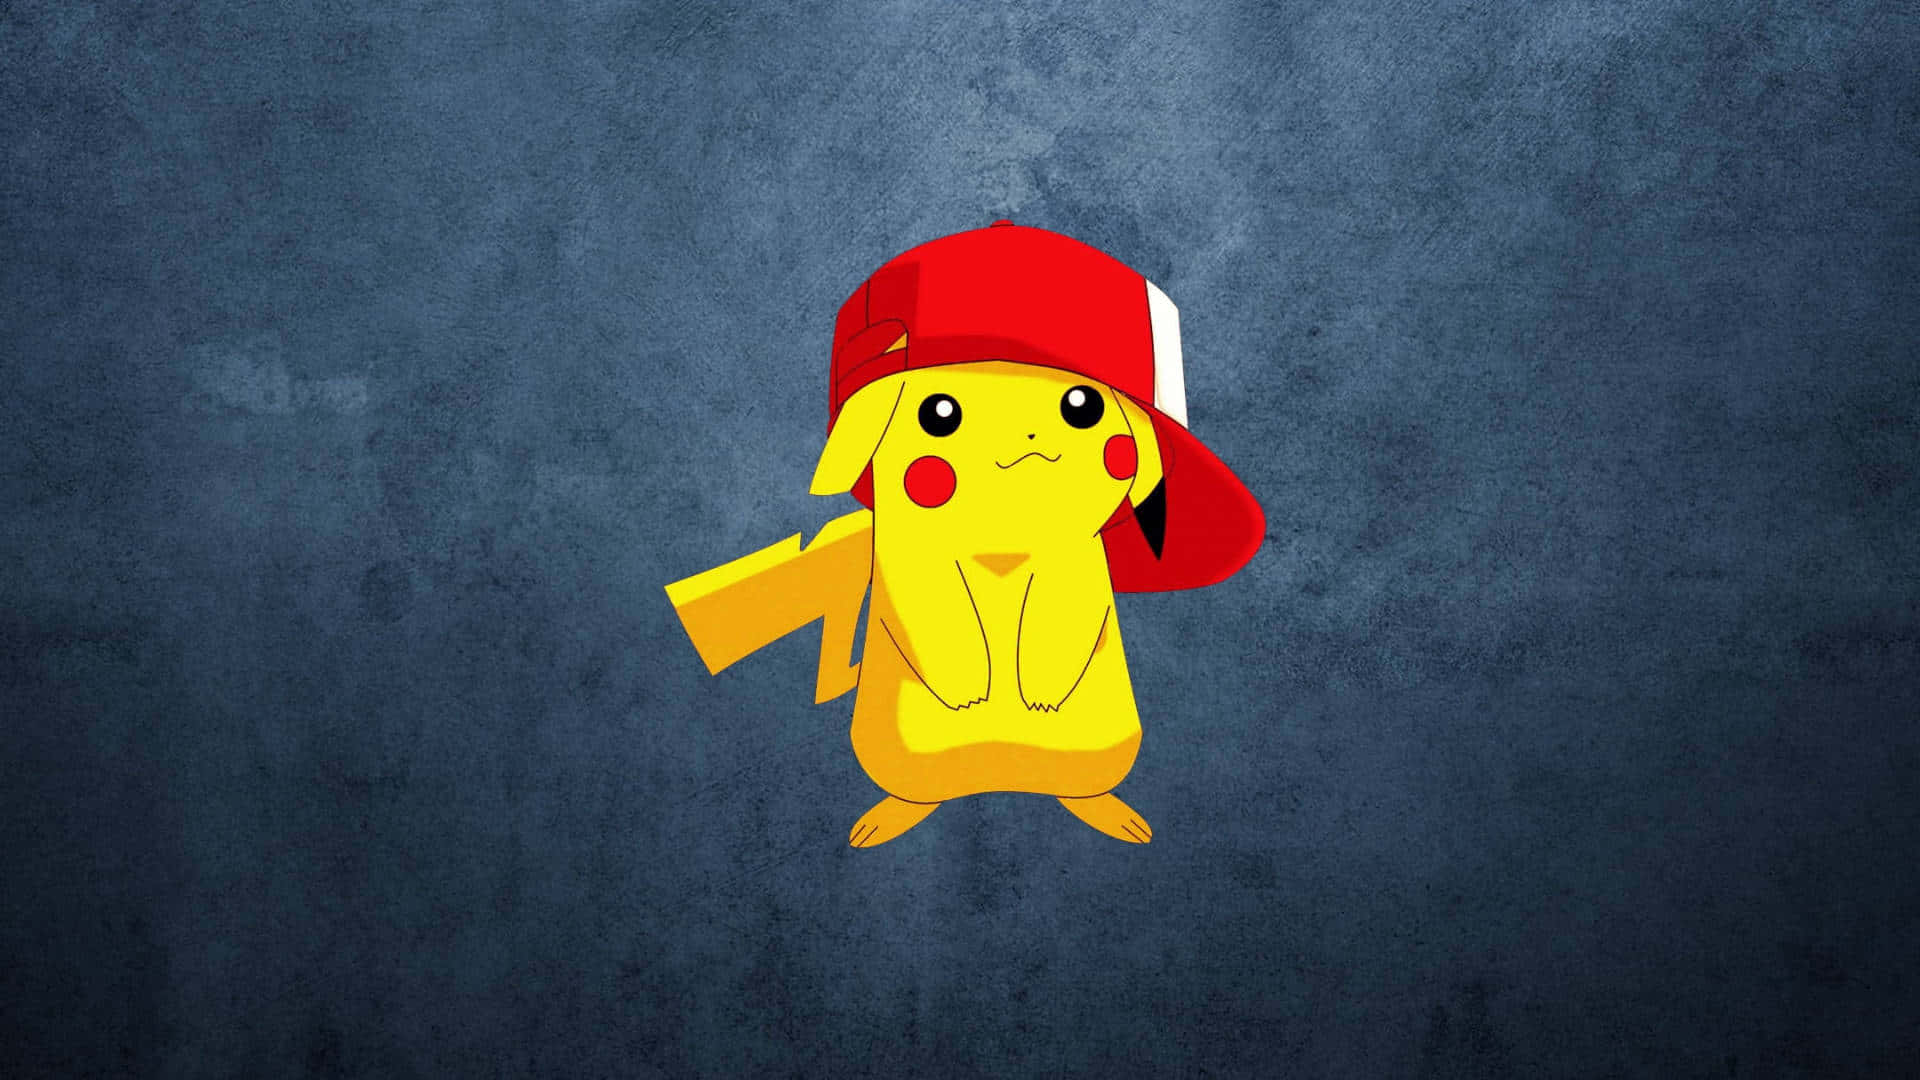 Pikachu Wallpapers Hd Wallpapers